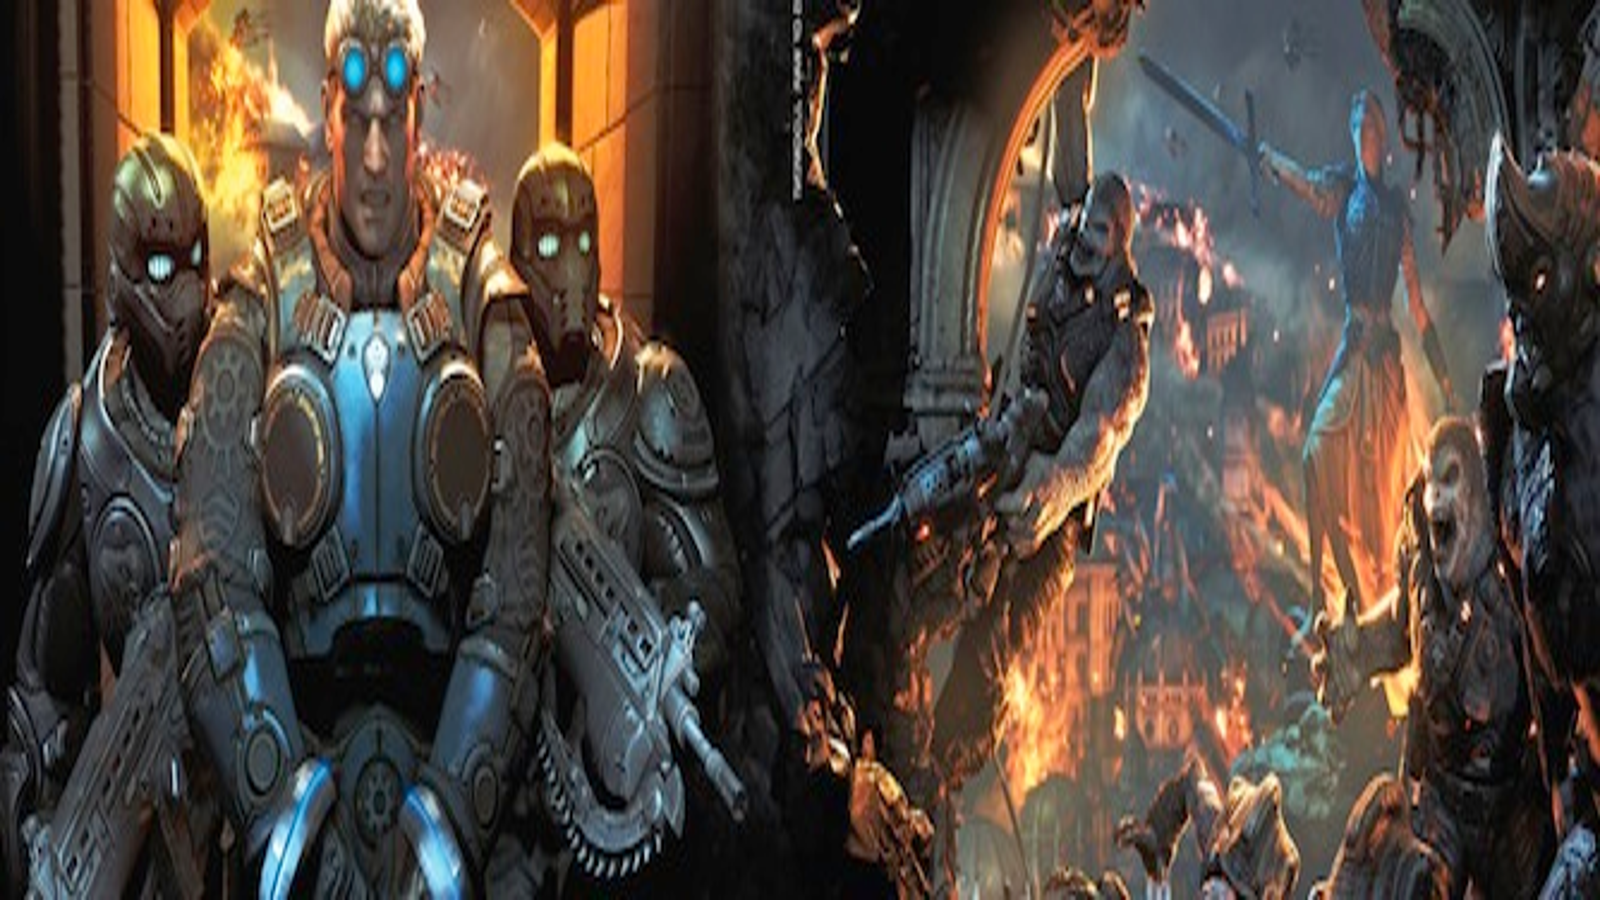 How long is Gears of War: Judgment?